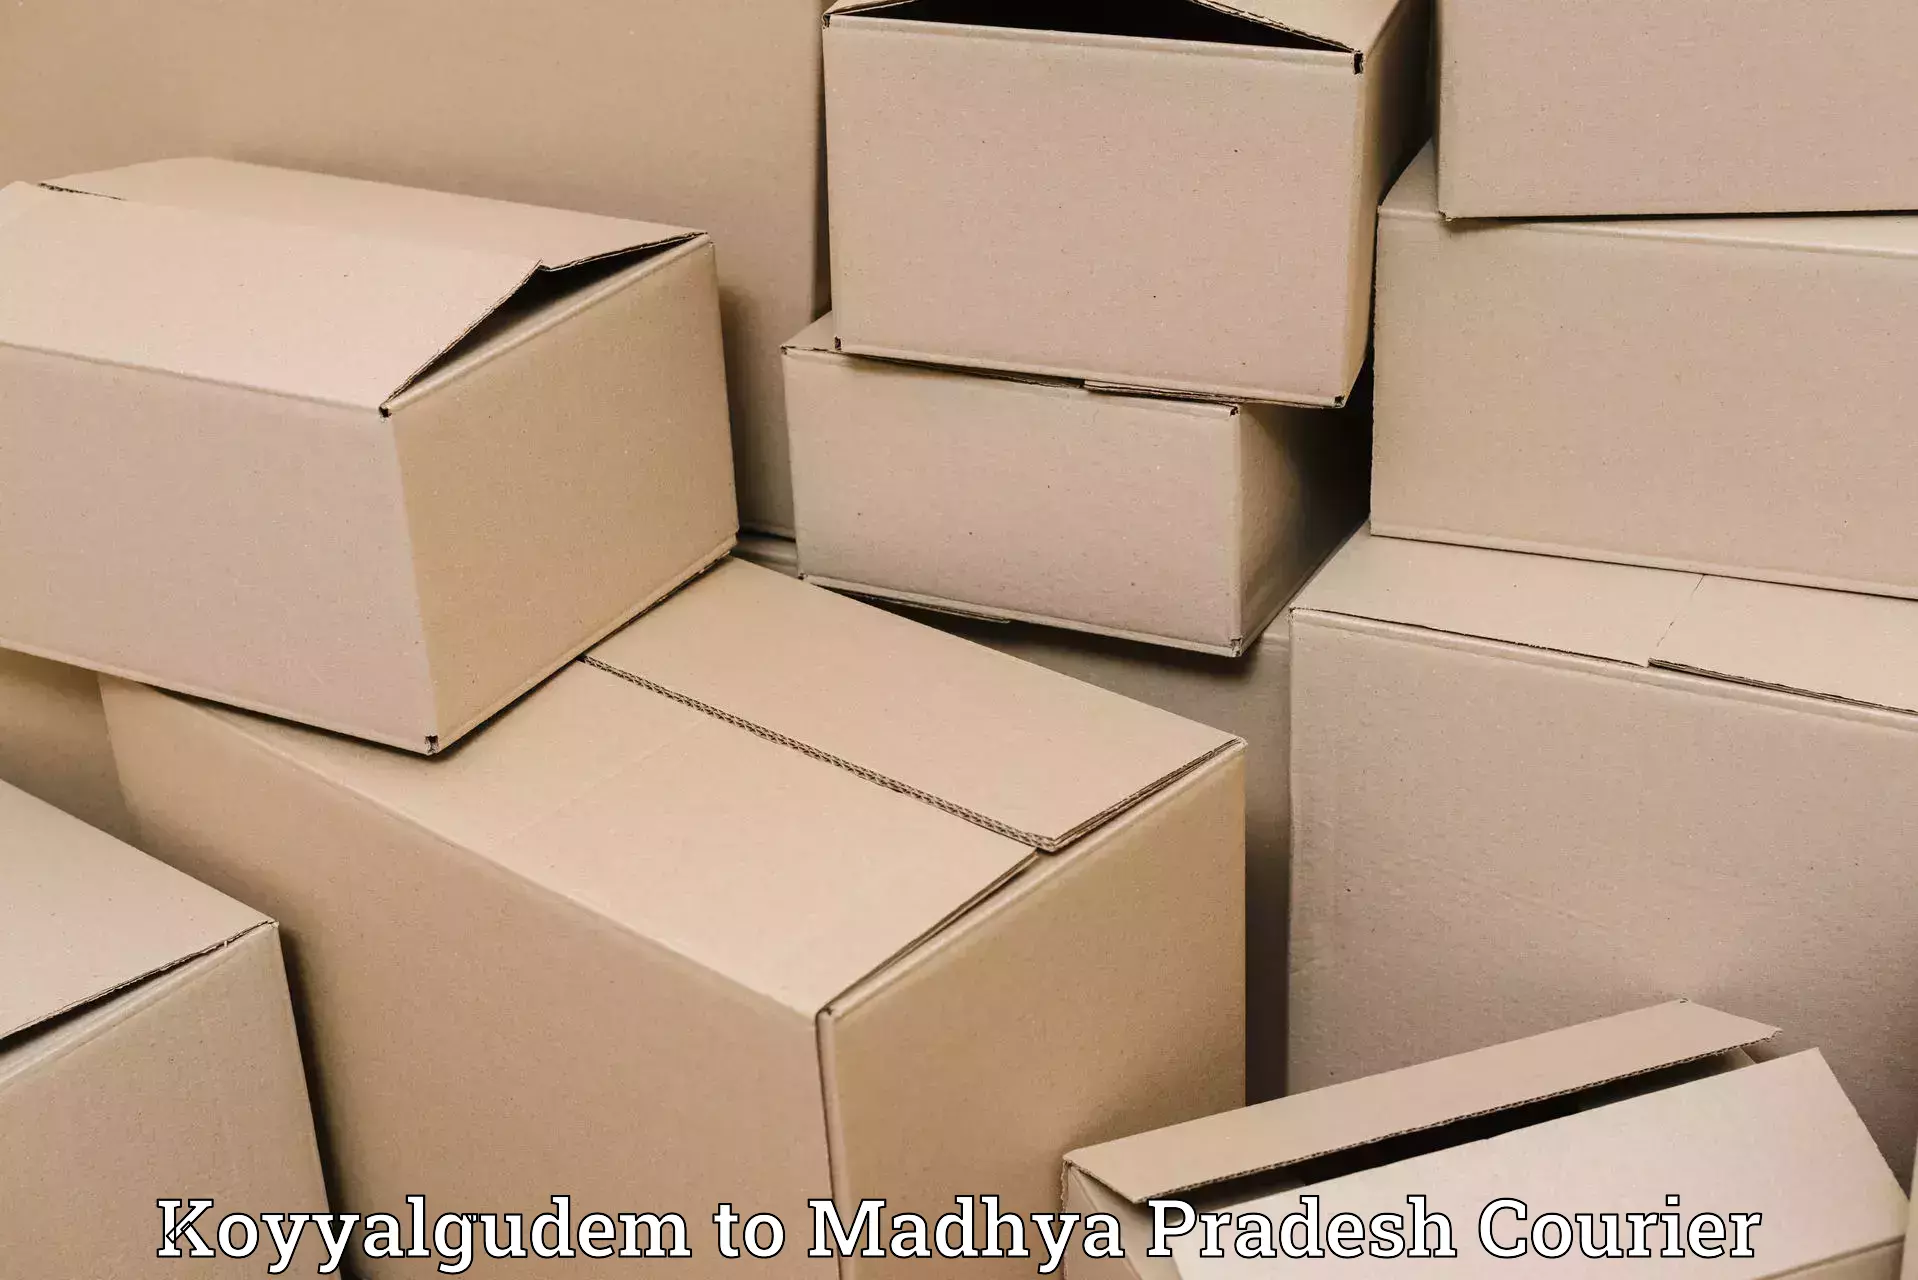 Optimized courier strategies Koyyalgudem to Indore